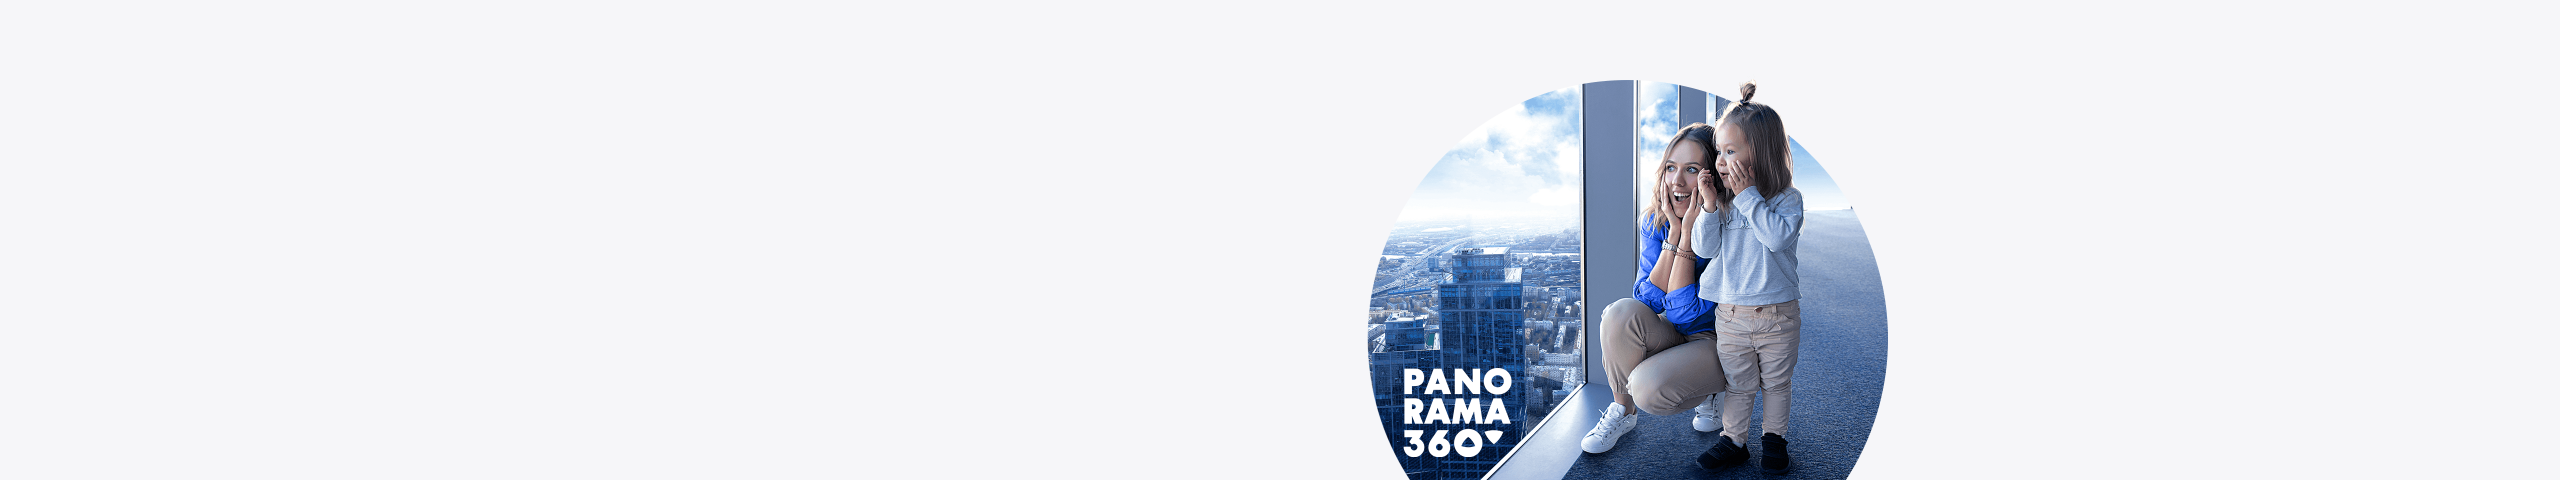 Скидка 10% на посещение PANORAMA360